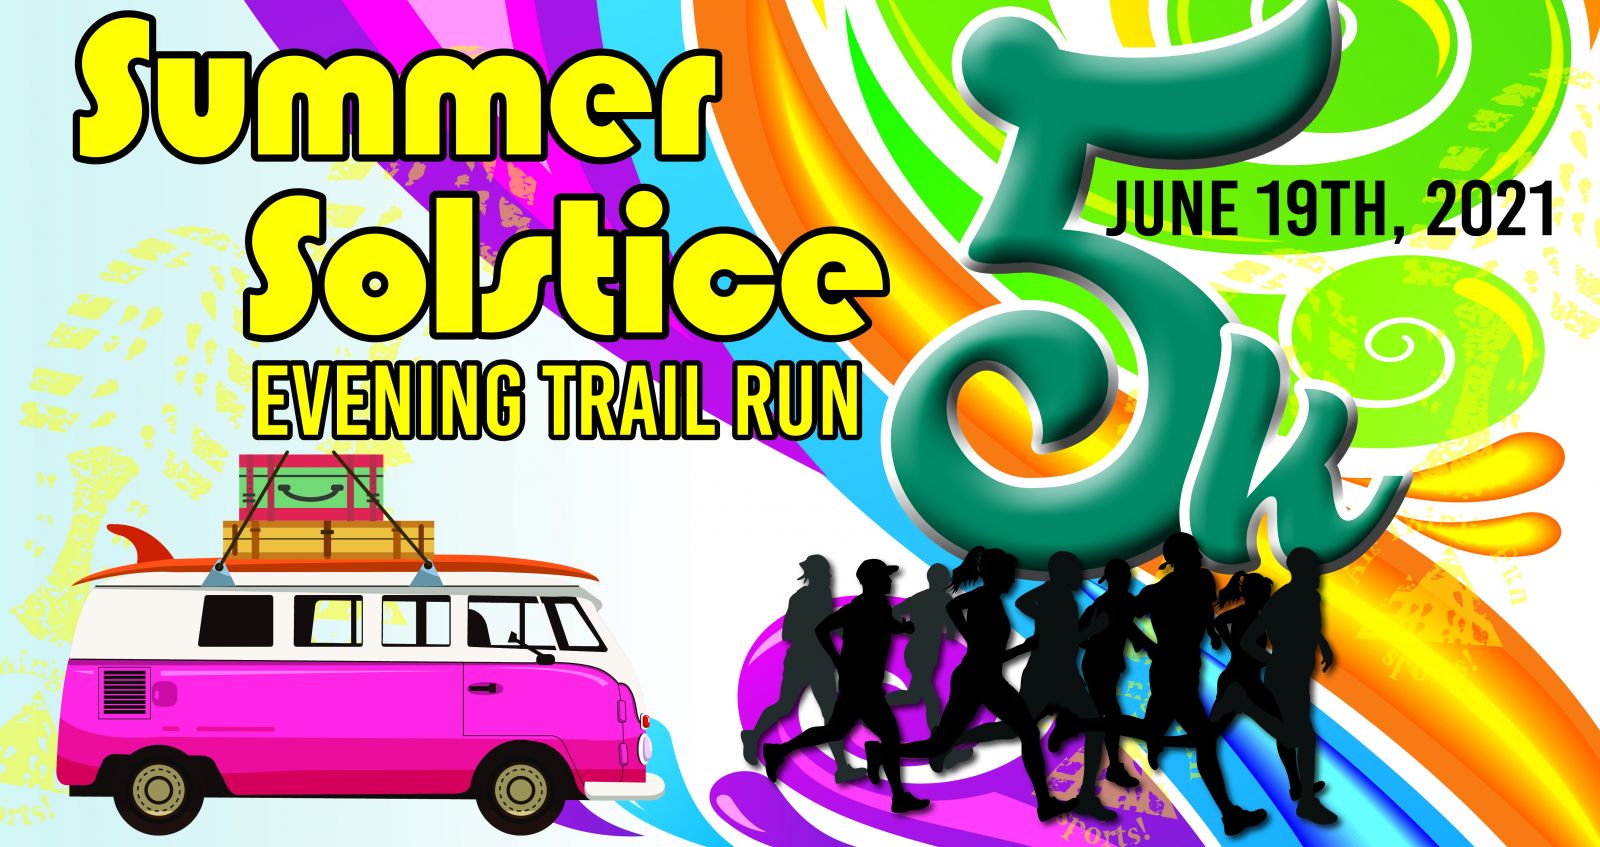 Summer Solstice Evening Trail Run logo on RaceRaves